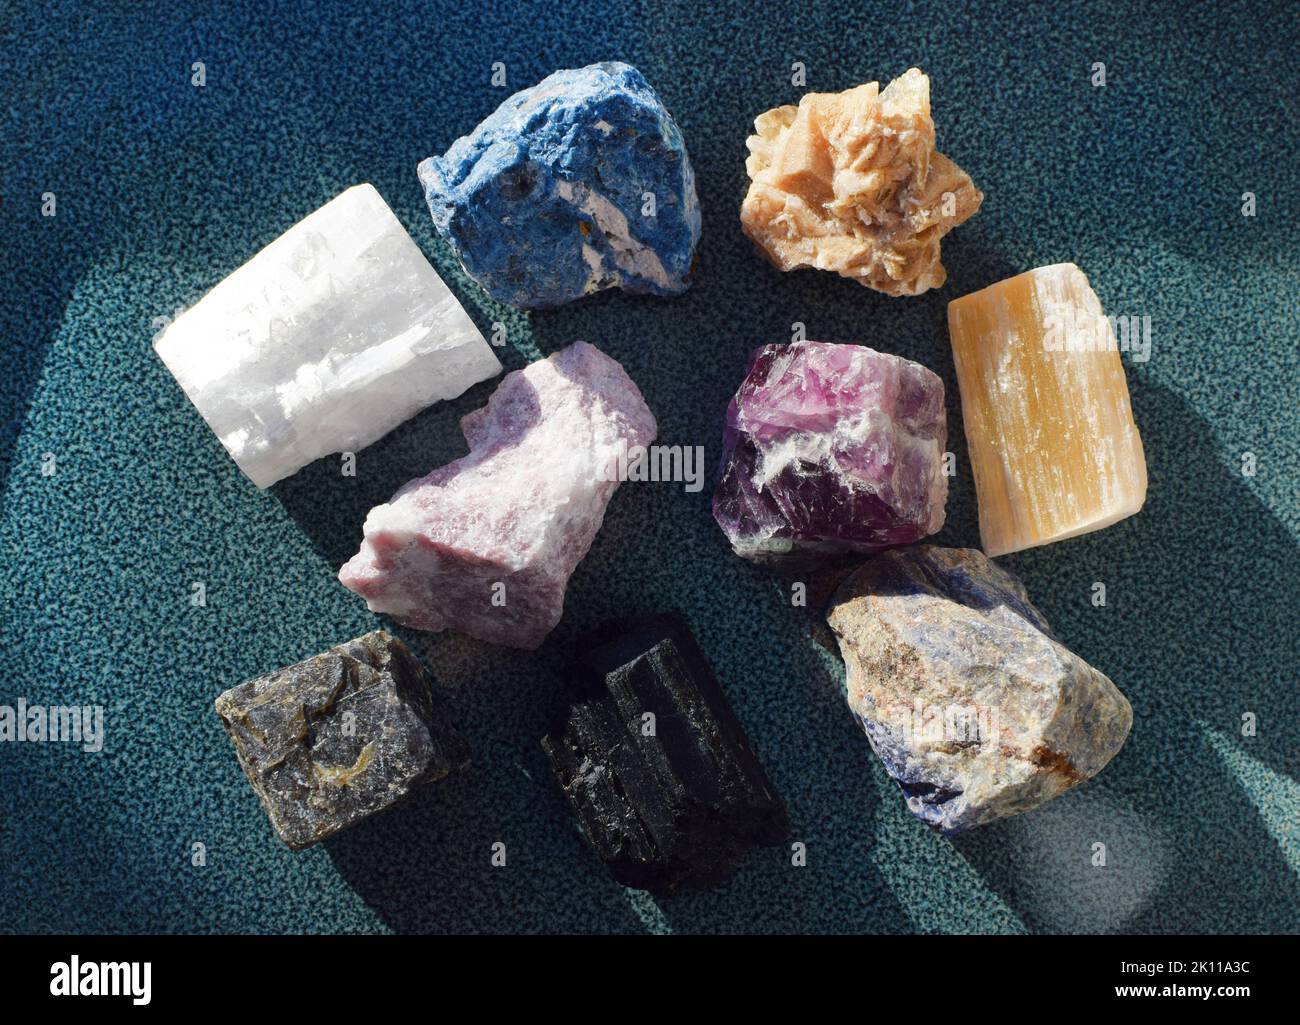 Multi-colored gemstones, minerals on a blue ceramic plate. Rose quartz, turquoise, labradorite, sodalite, fluorite, red gypsum, black tourmaline, scho Stock Photo